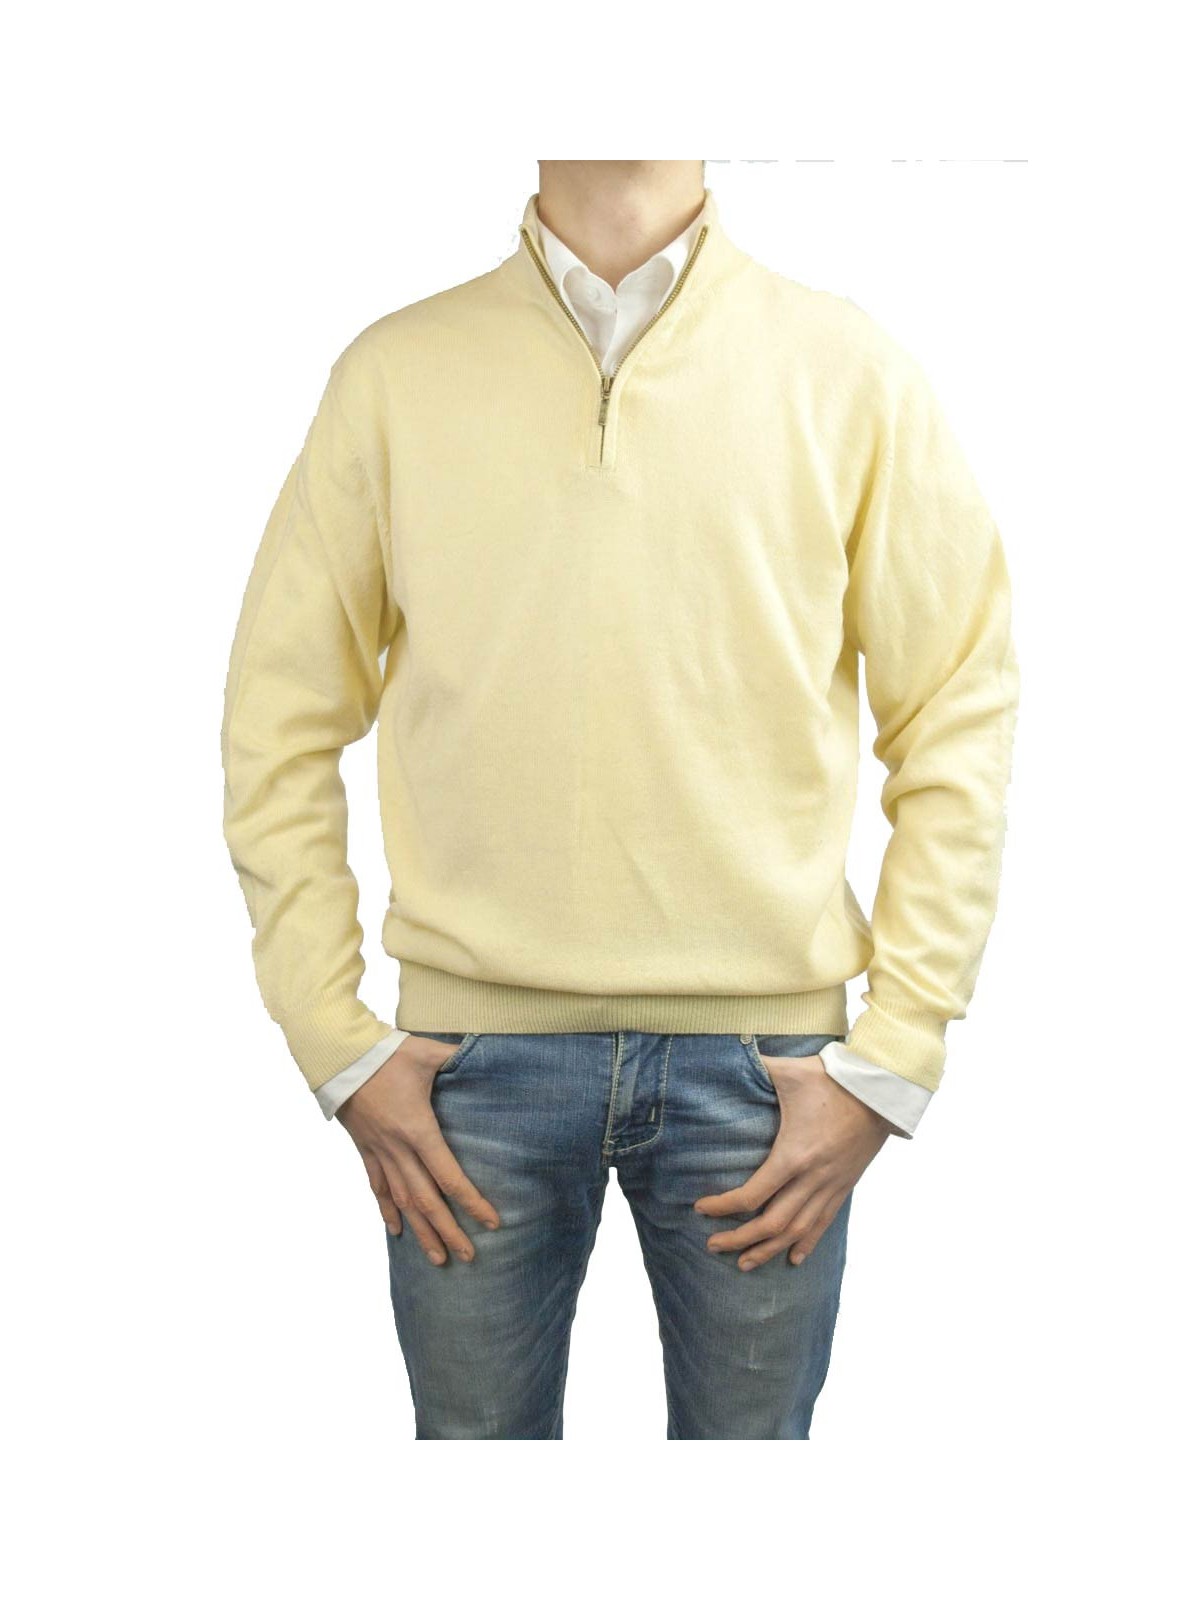 Men's Turtleneck Sweater Zip Light Yellow 100% Pure Cashmere 2 Yarns